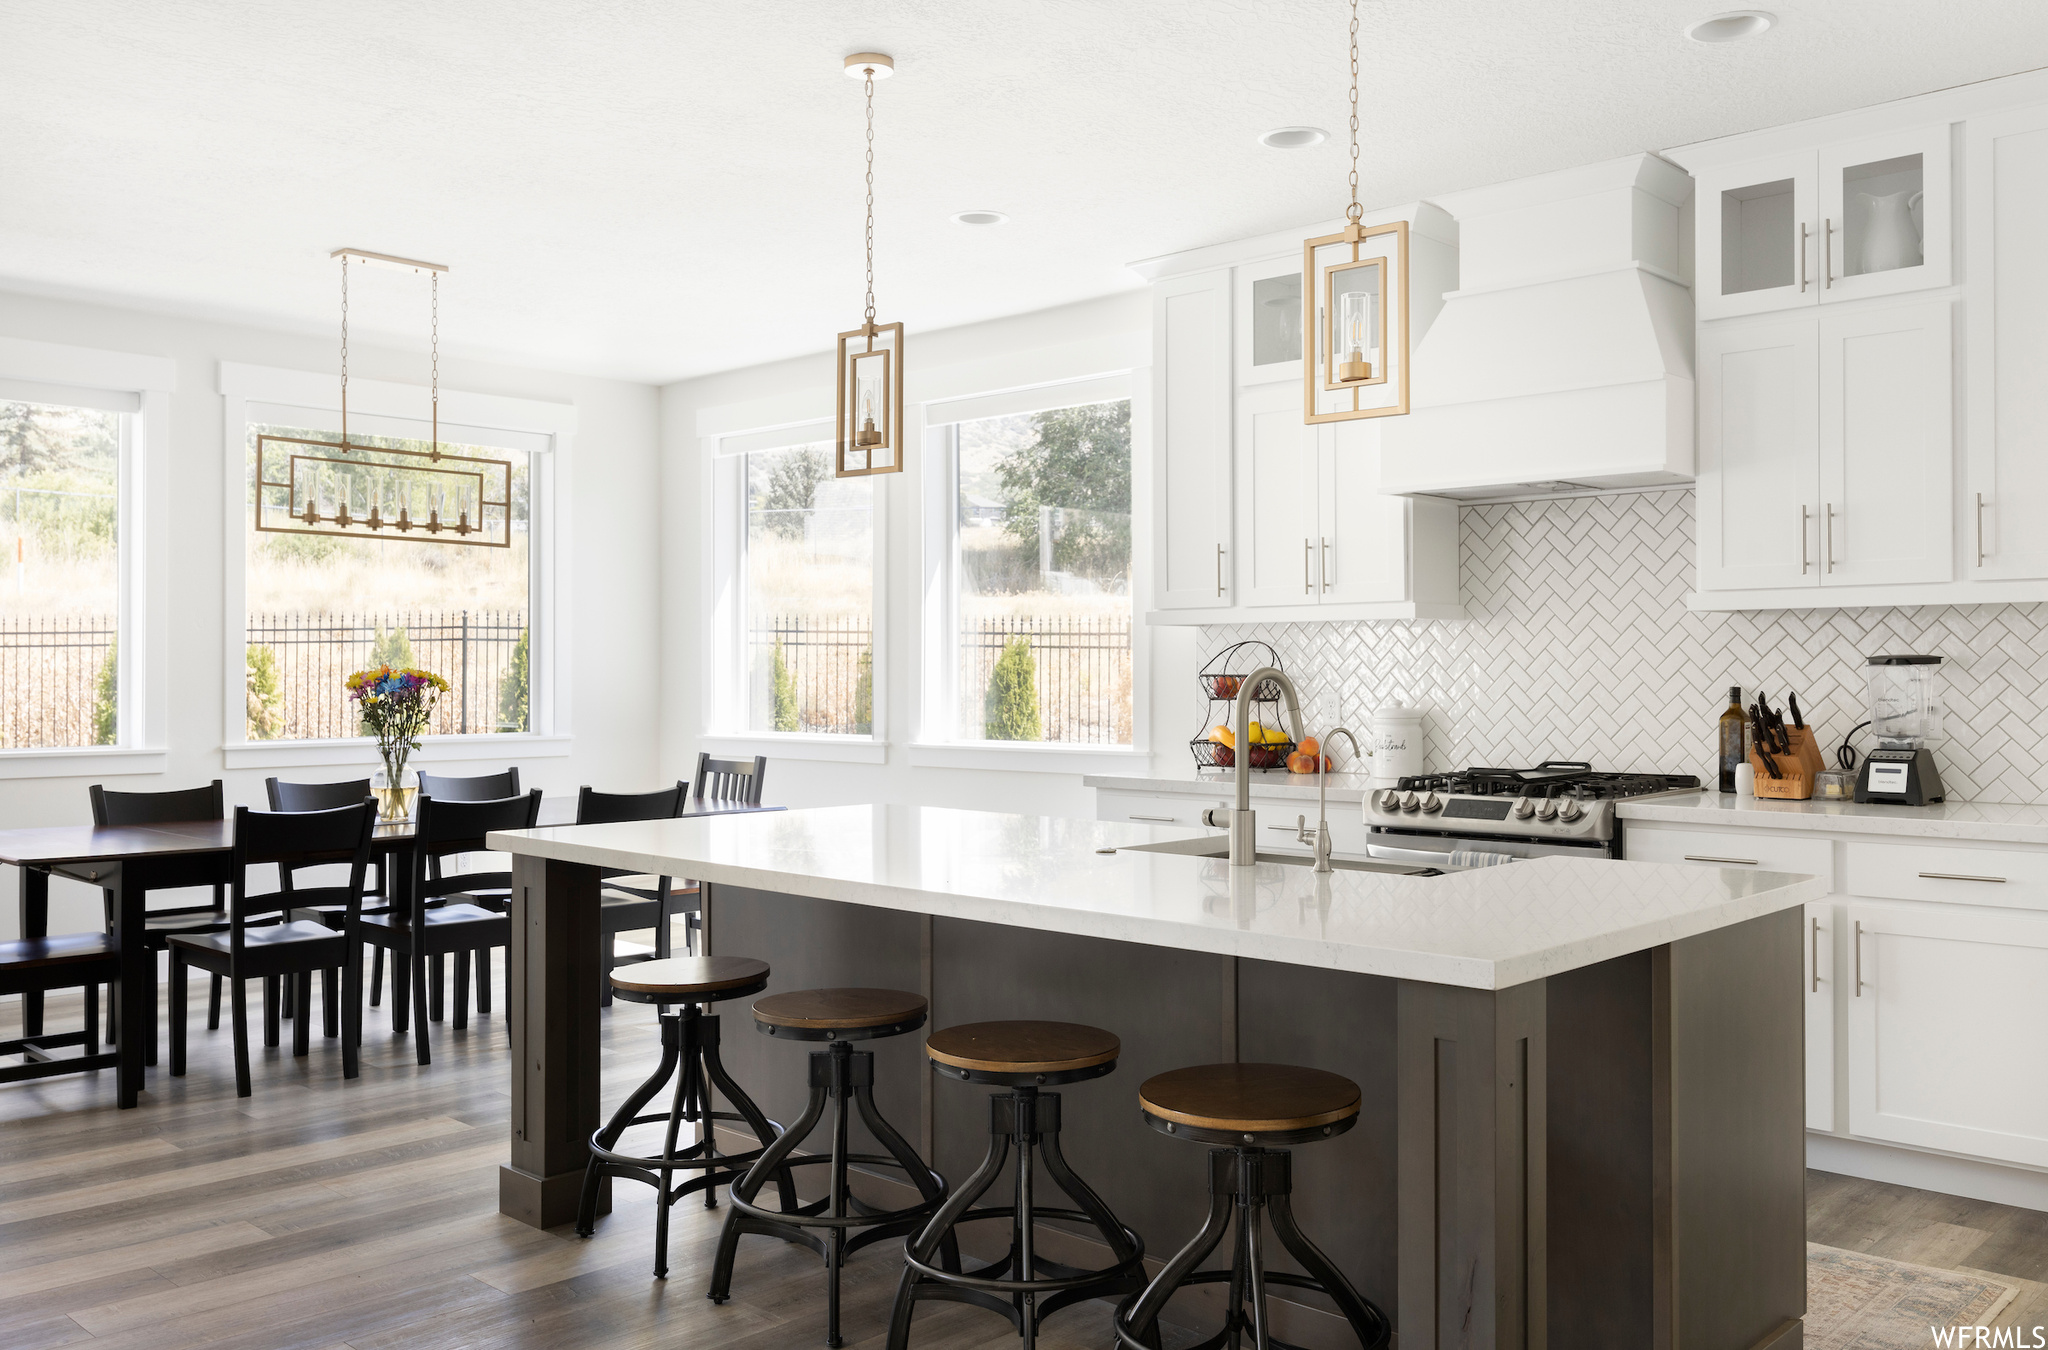 Kitchen featuring dark hardwood / wood-style floors, hanging light fixtures, and premium range hood